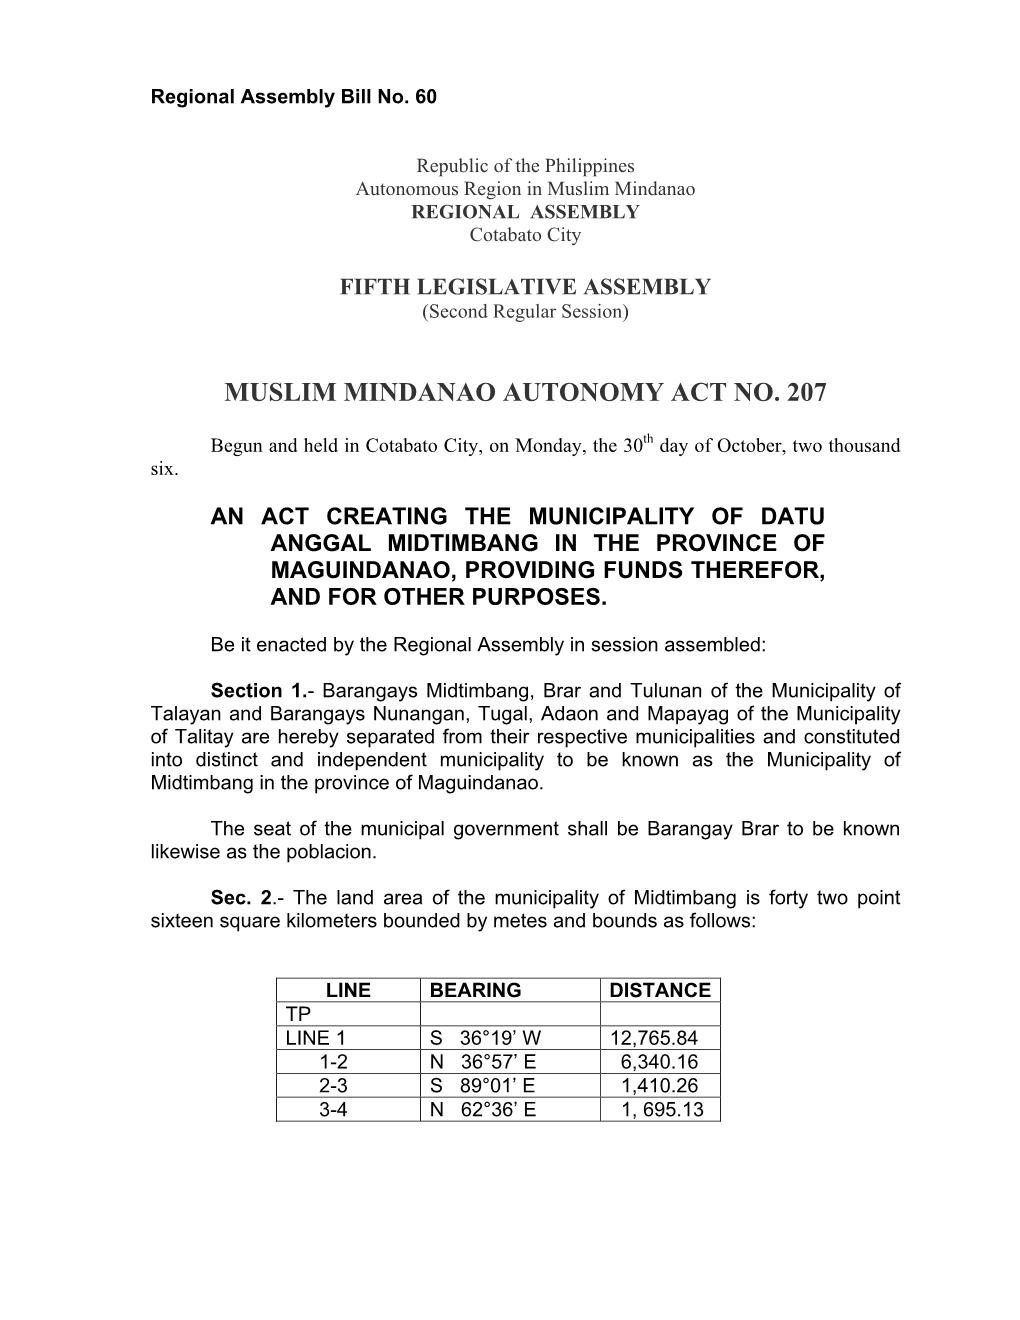 Muslim Mindanao Autonomy Act No. 207